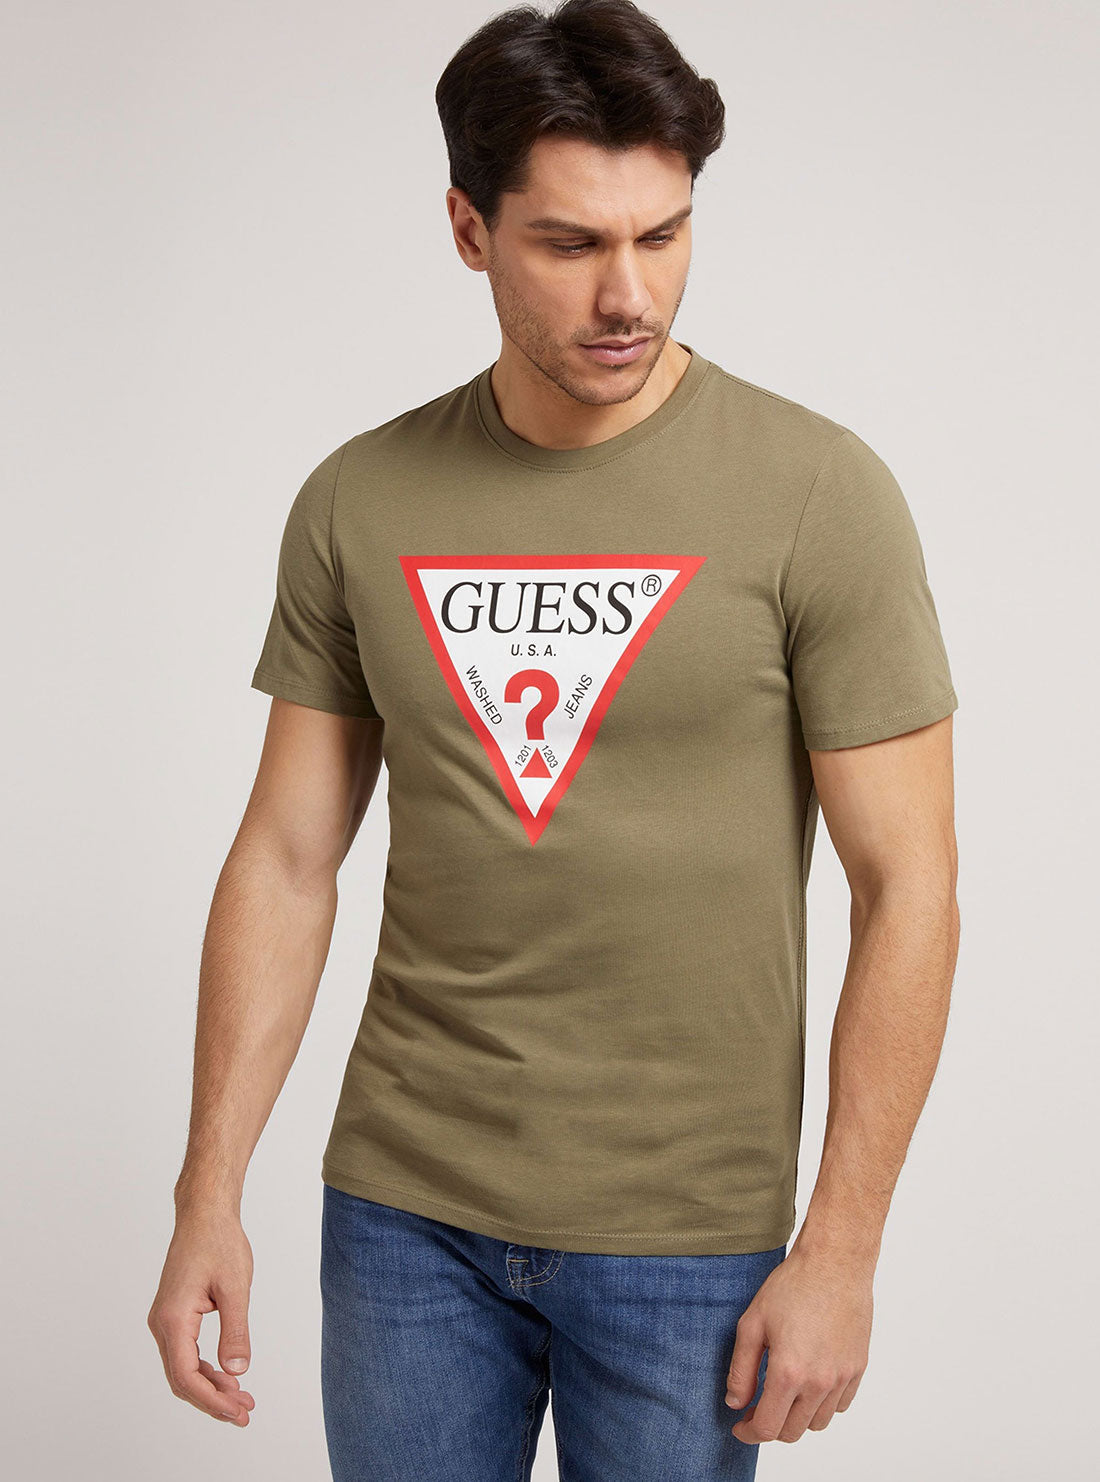 GUESS Mens Eco Desert Green Original Logo T-Shirt M1RI71I3Z11 Front View